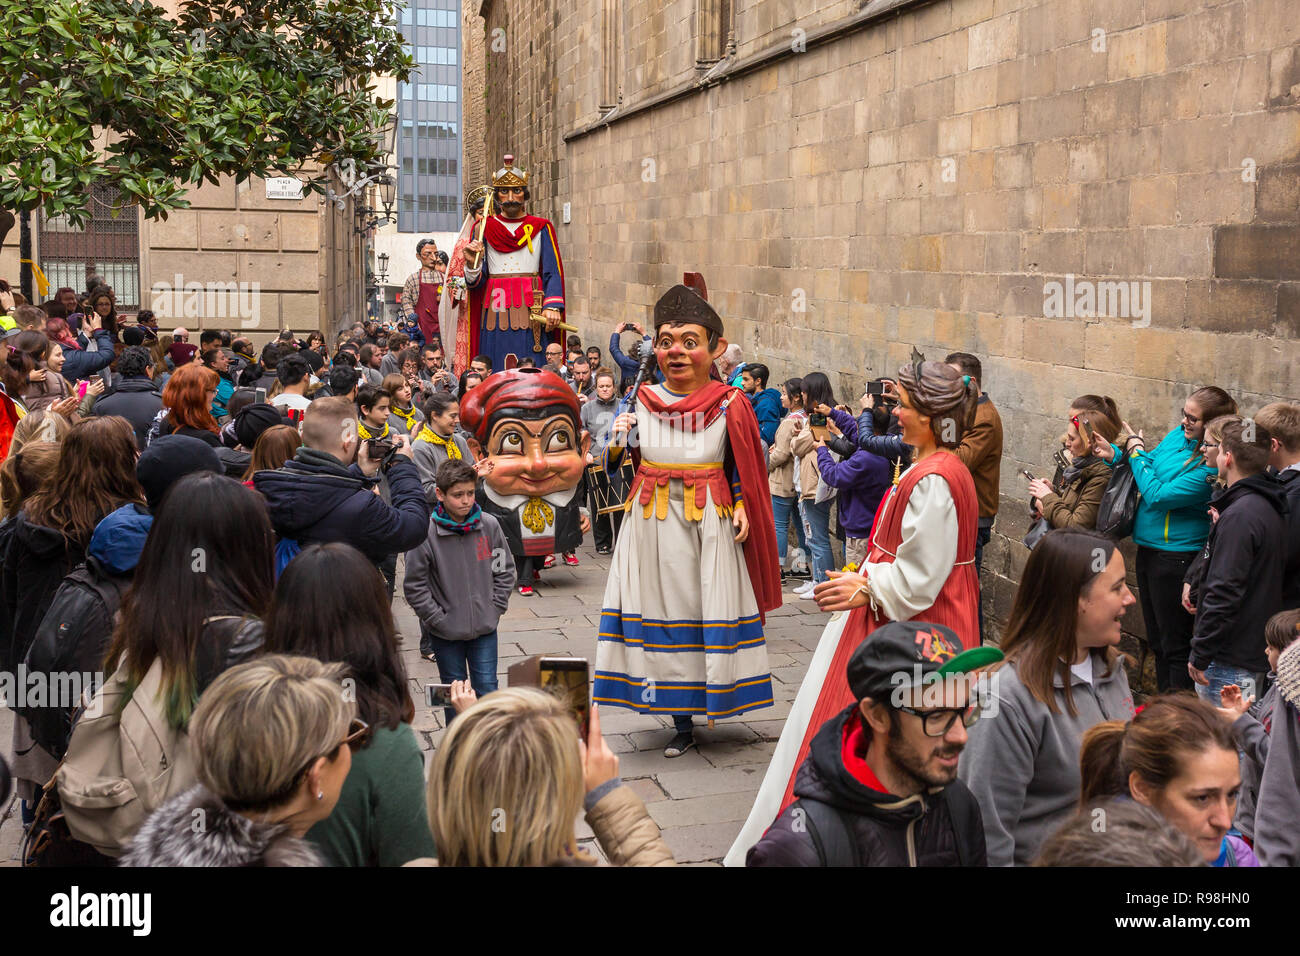 Barcelona, Spain - March 25: Traditional giants parade in Barcelona, Catalonia, Spain Stock Photo